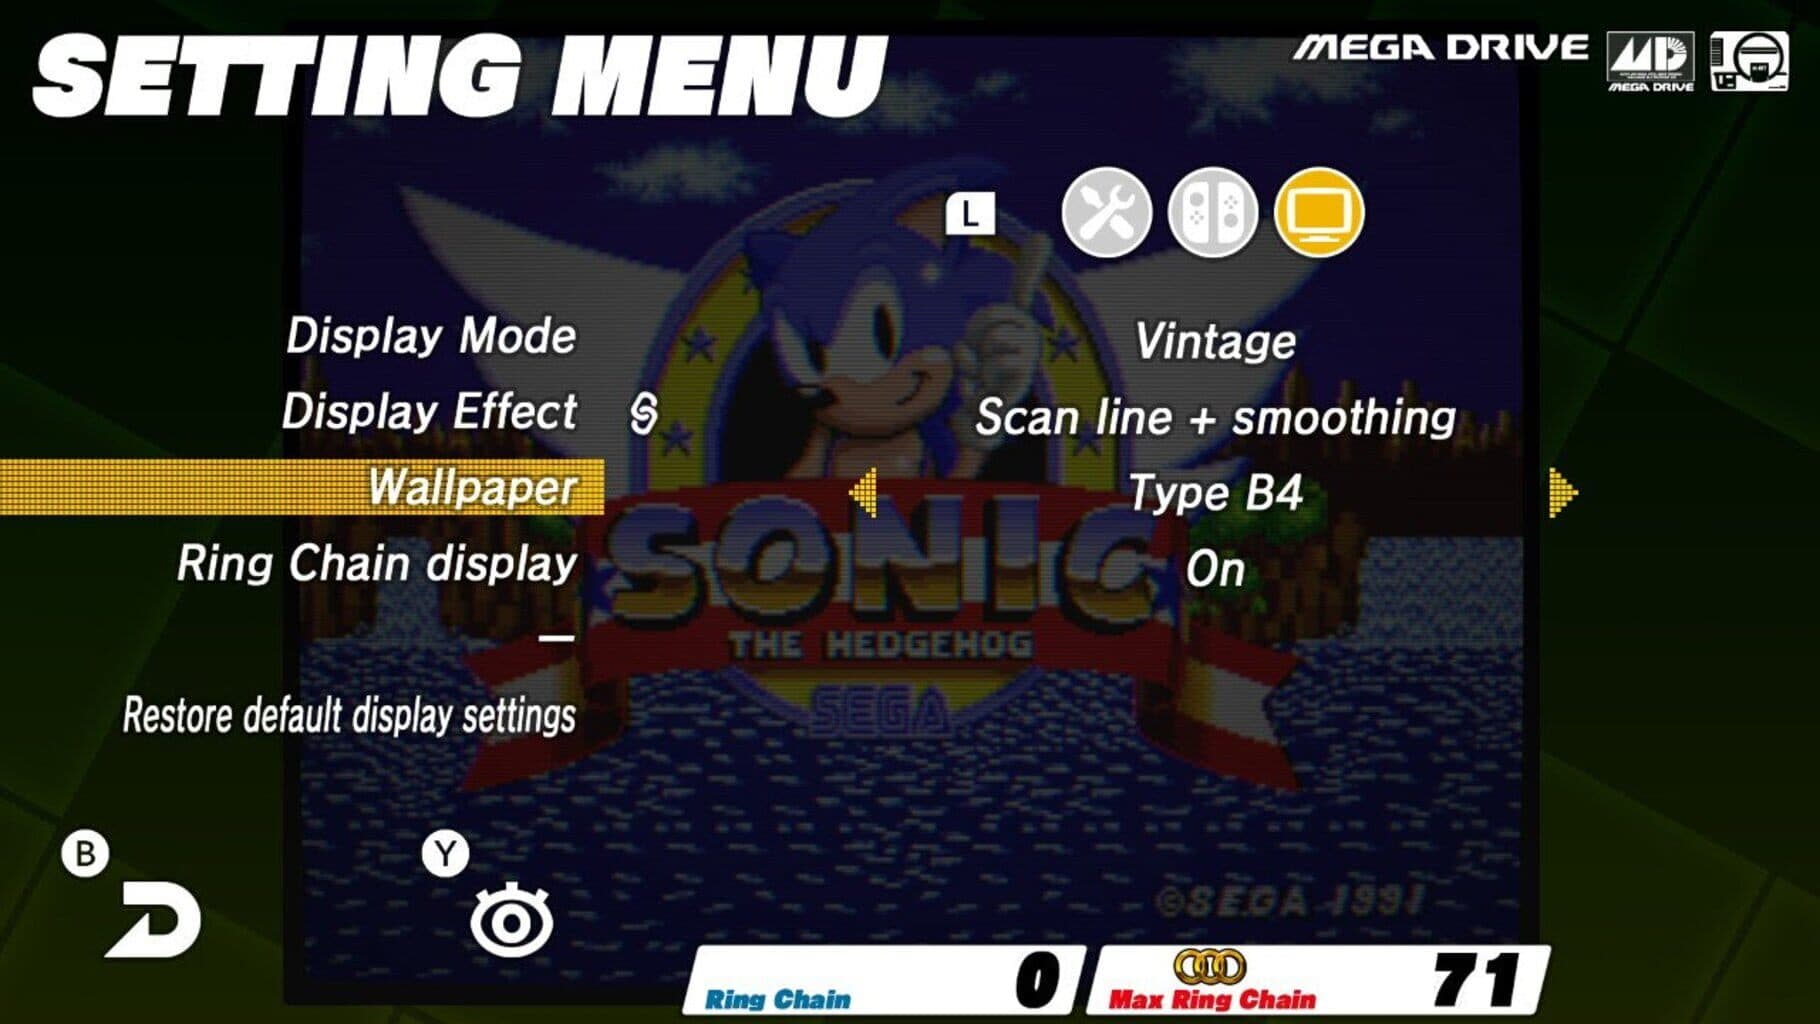 Sega Ages: Sonic the Hedgehog Image